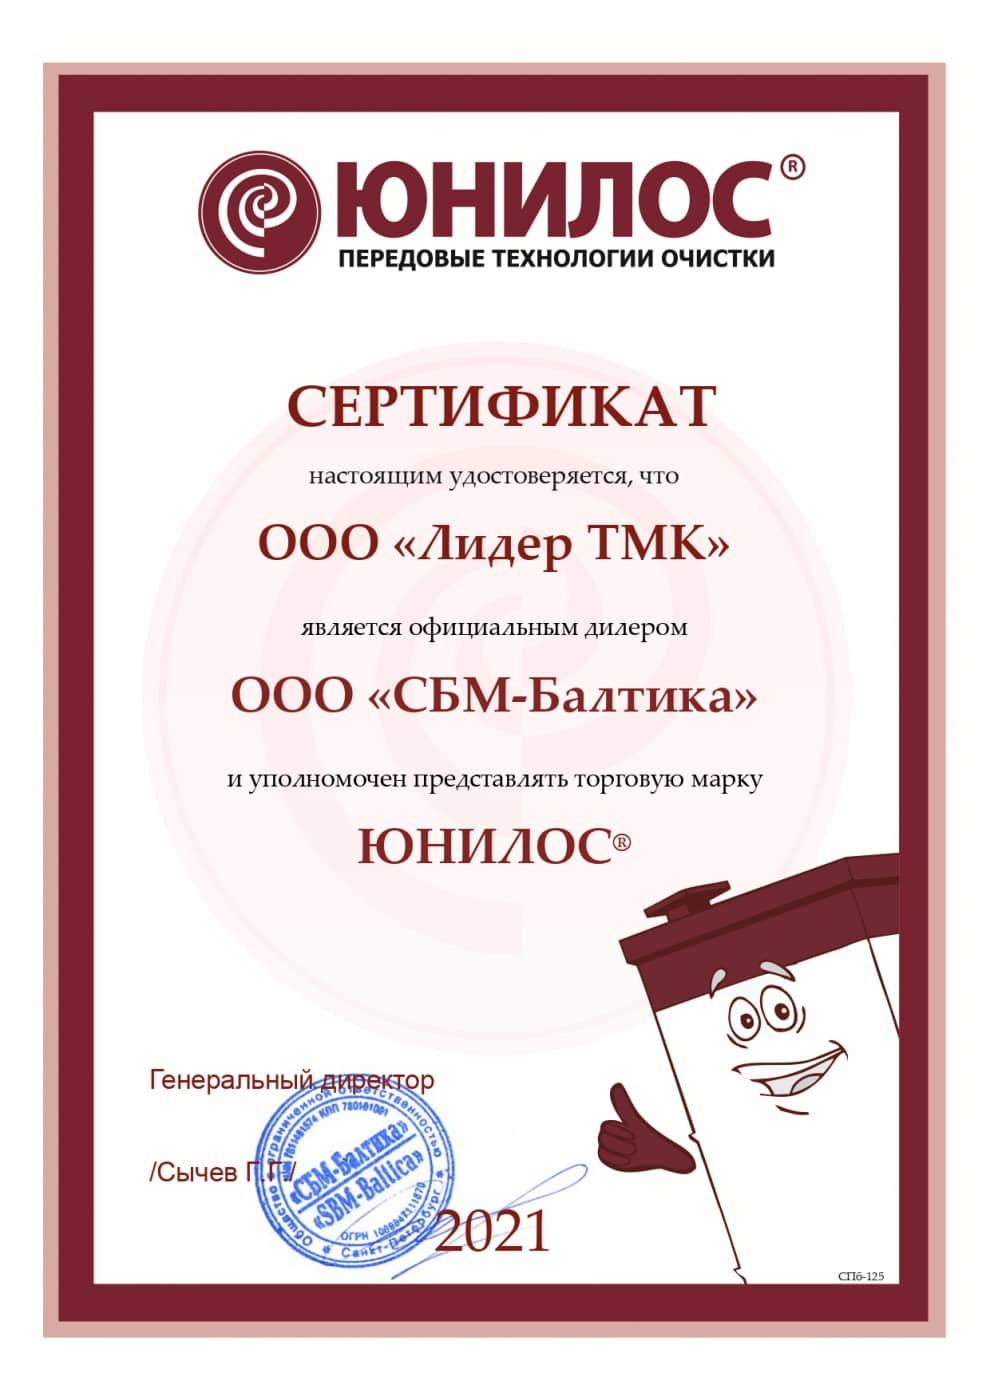 Септик Астра ДАБЛ 4 прин. сертификат